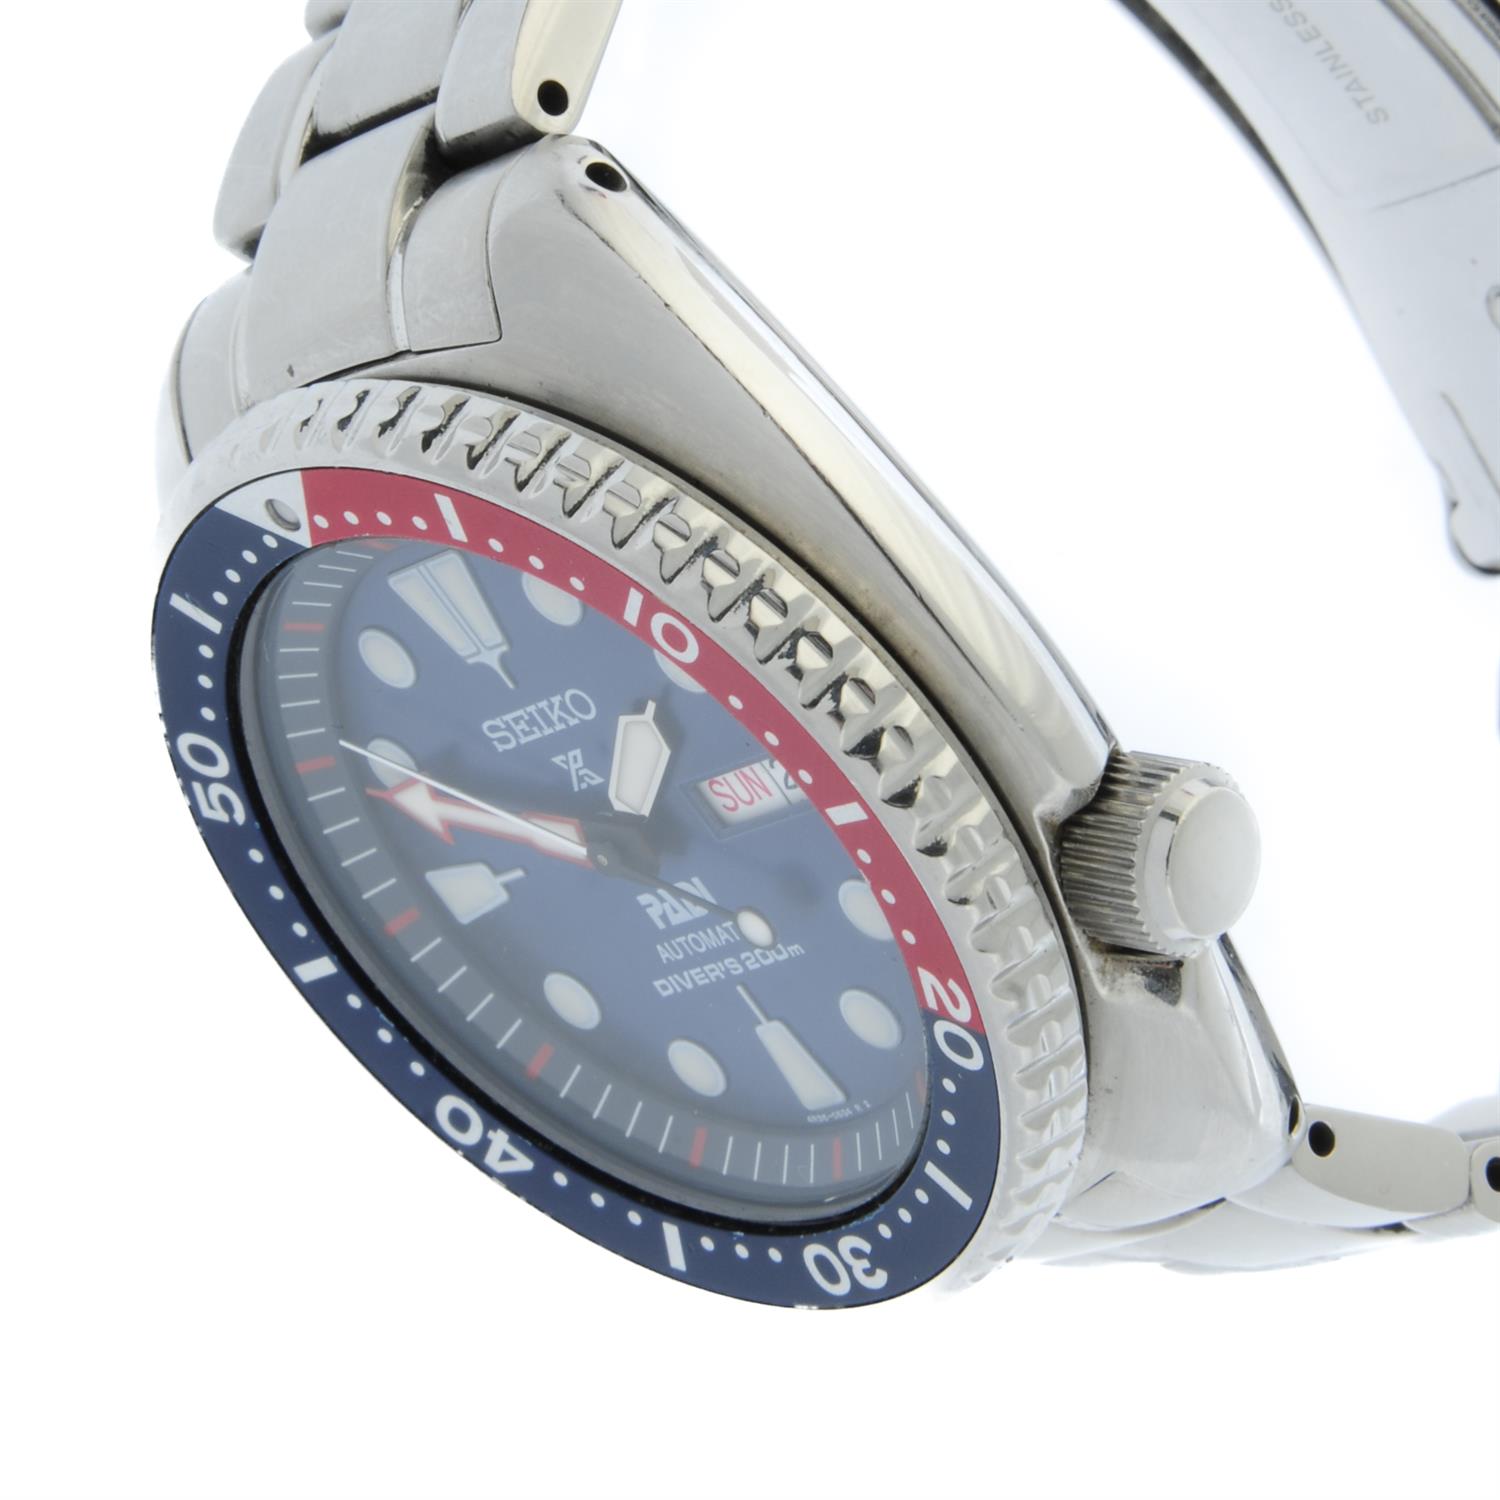 Seiko - a Prospex PADI watch, 45mm. - Image 3 of 4